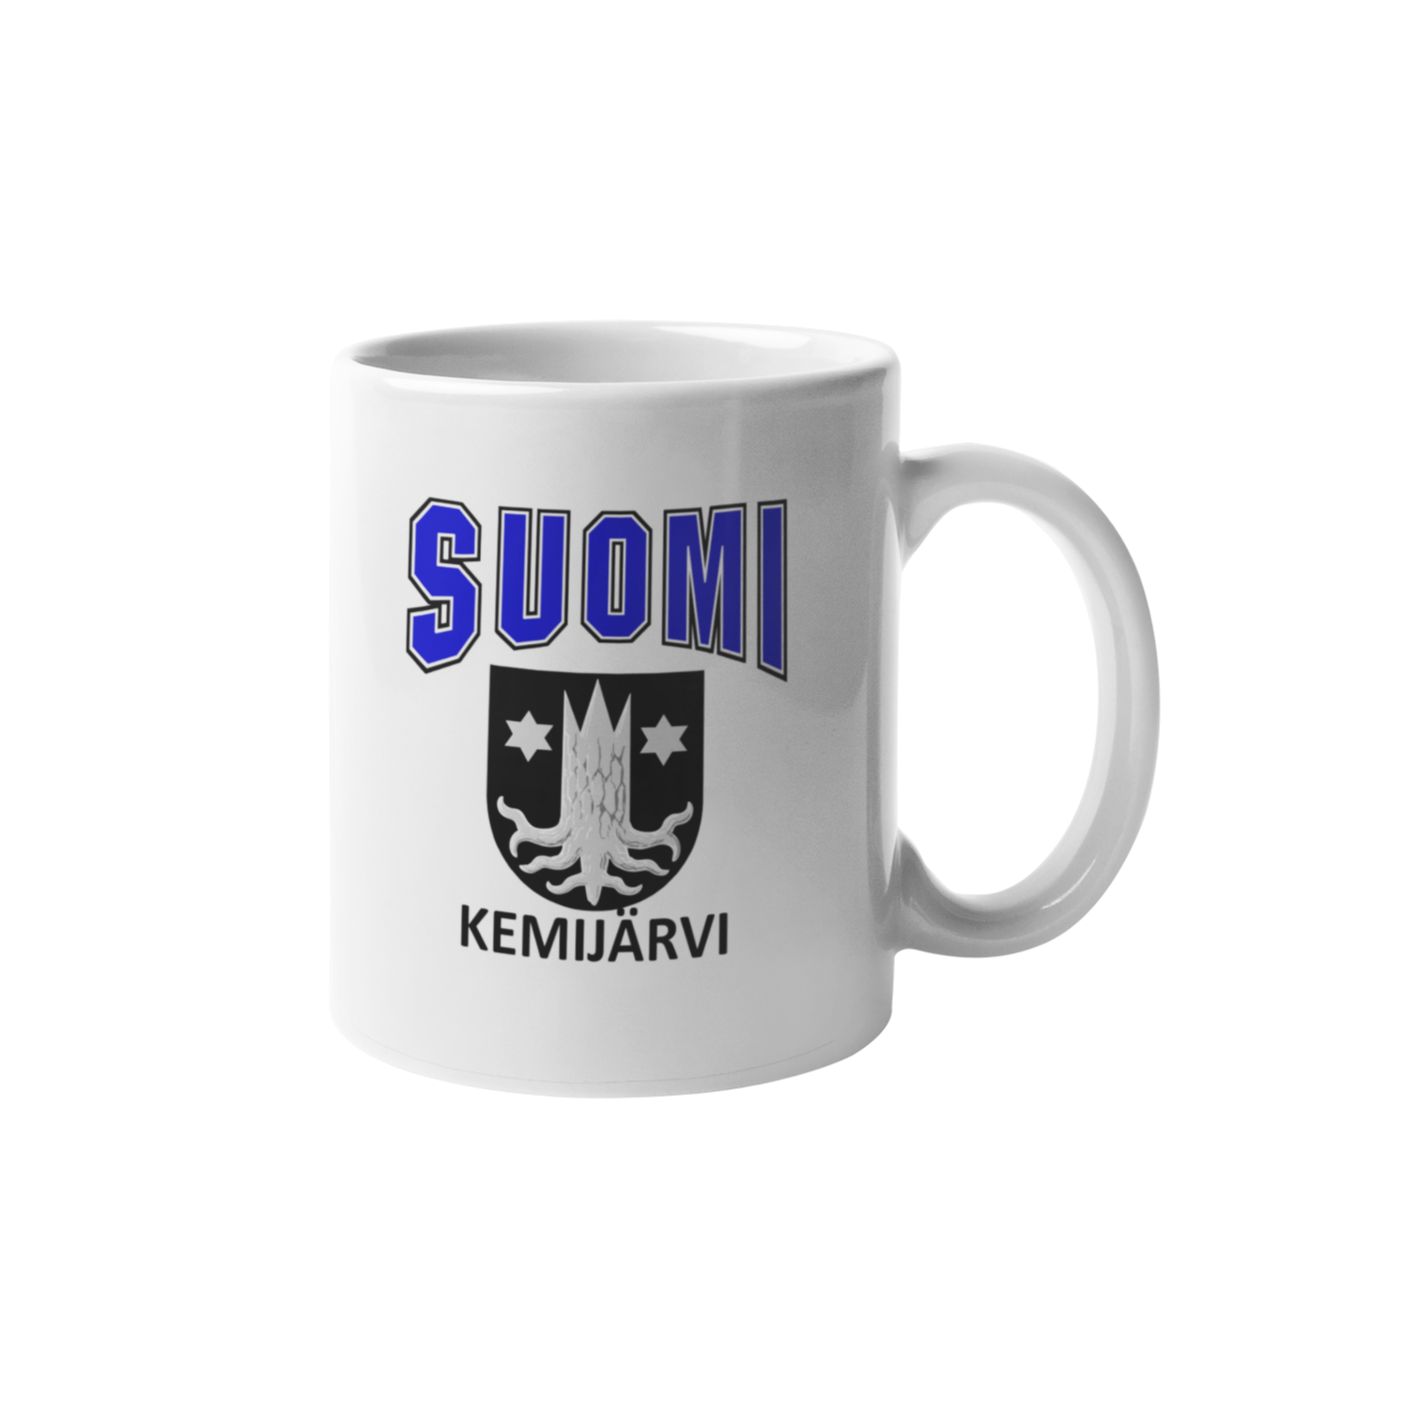 Suomi vaakuna Kemijärvi muki